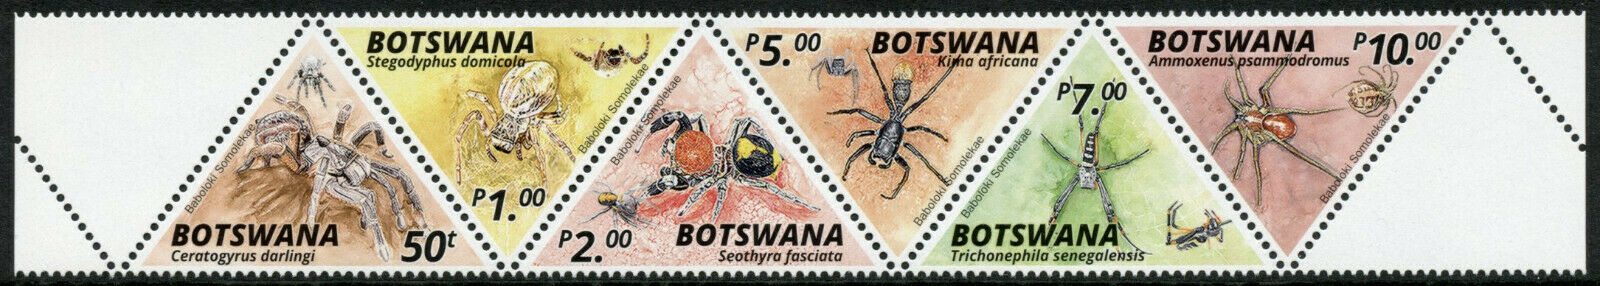 Botswana Spiders Stamps 2020 MNH Spider Fauna 6v Strip